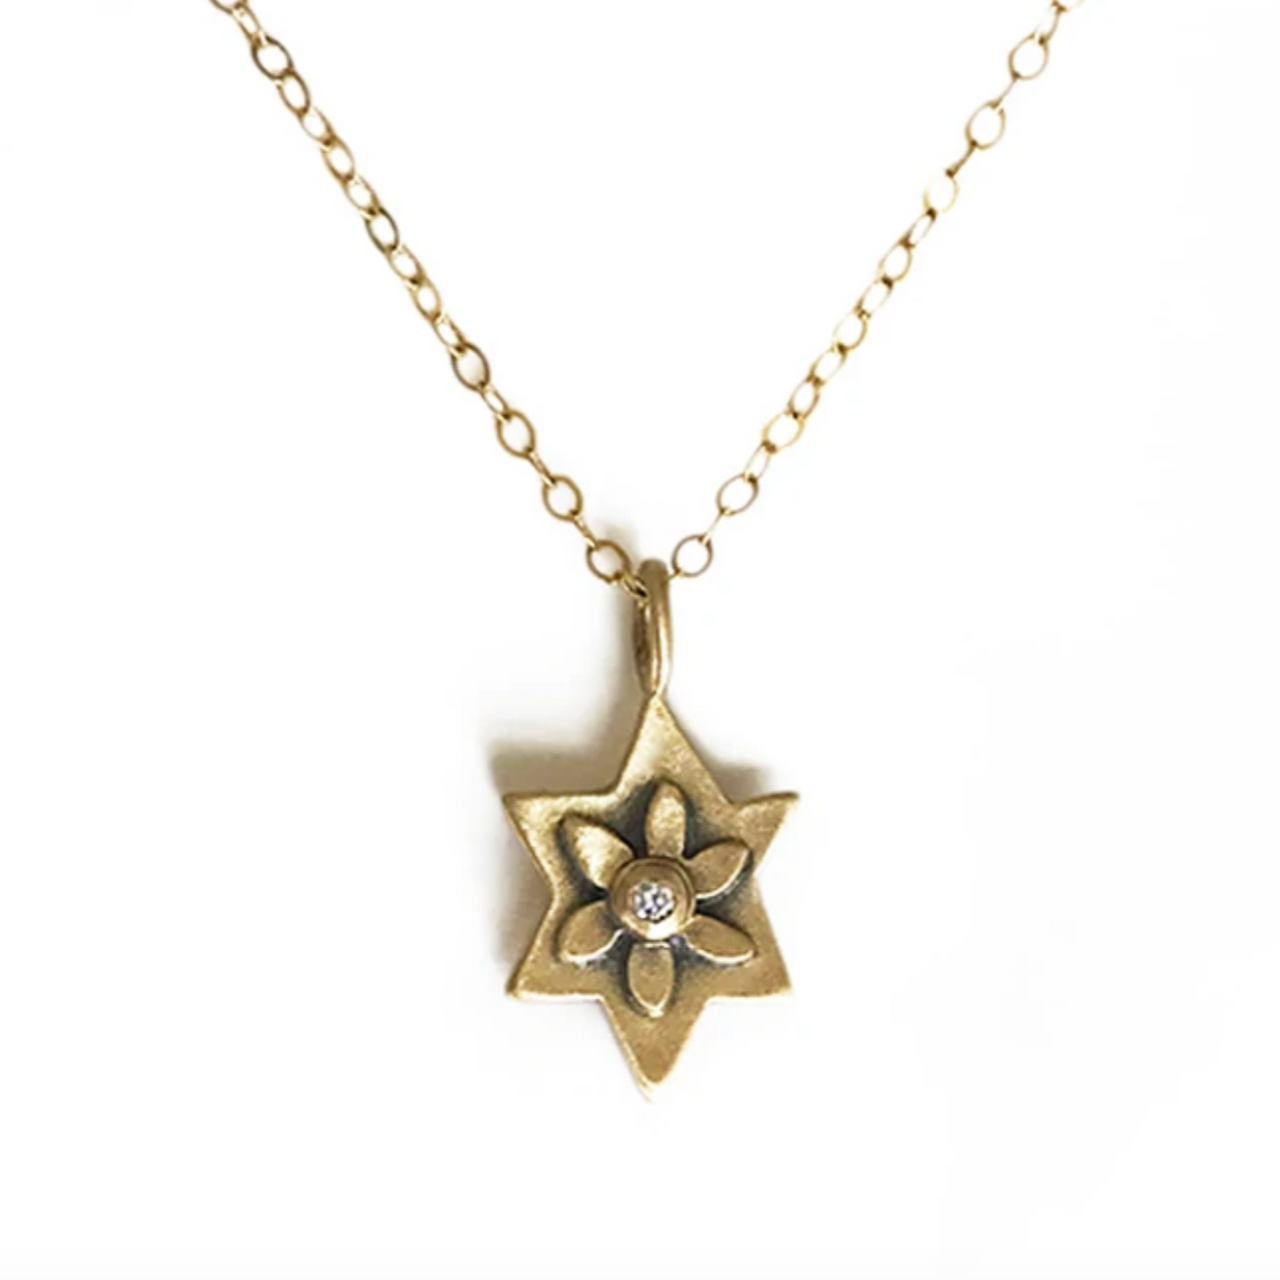 Emily Rosenfeld Necklaces 14k Gold Botanical Star of David Necklace with Gemstone by Emily Rosenfeld